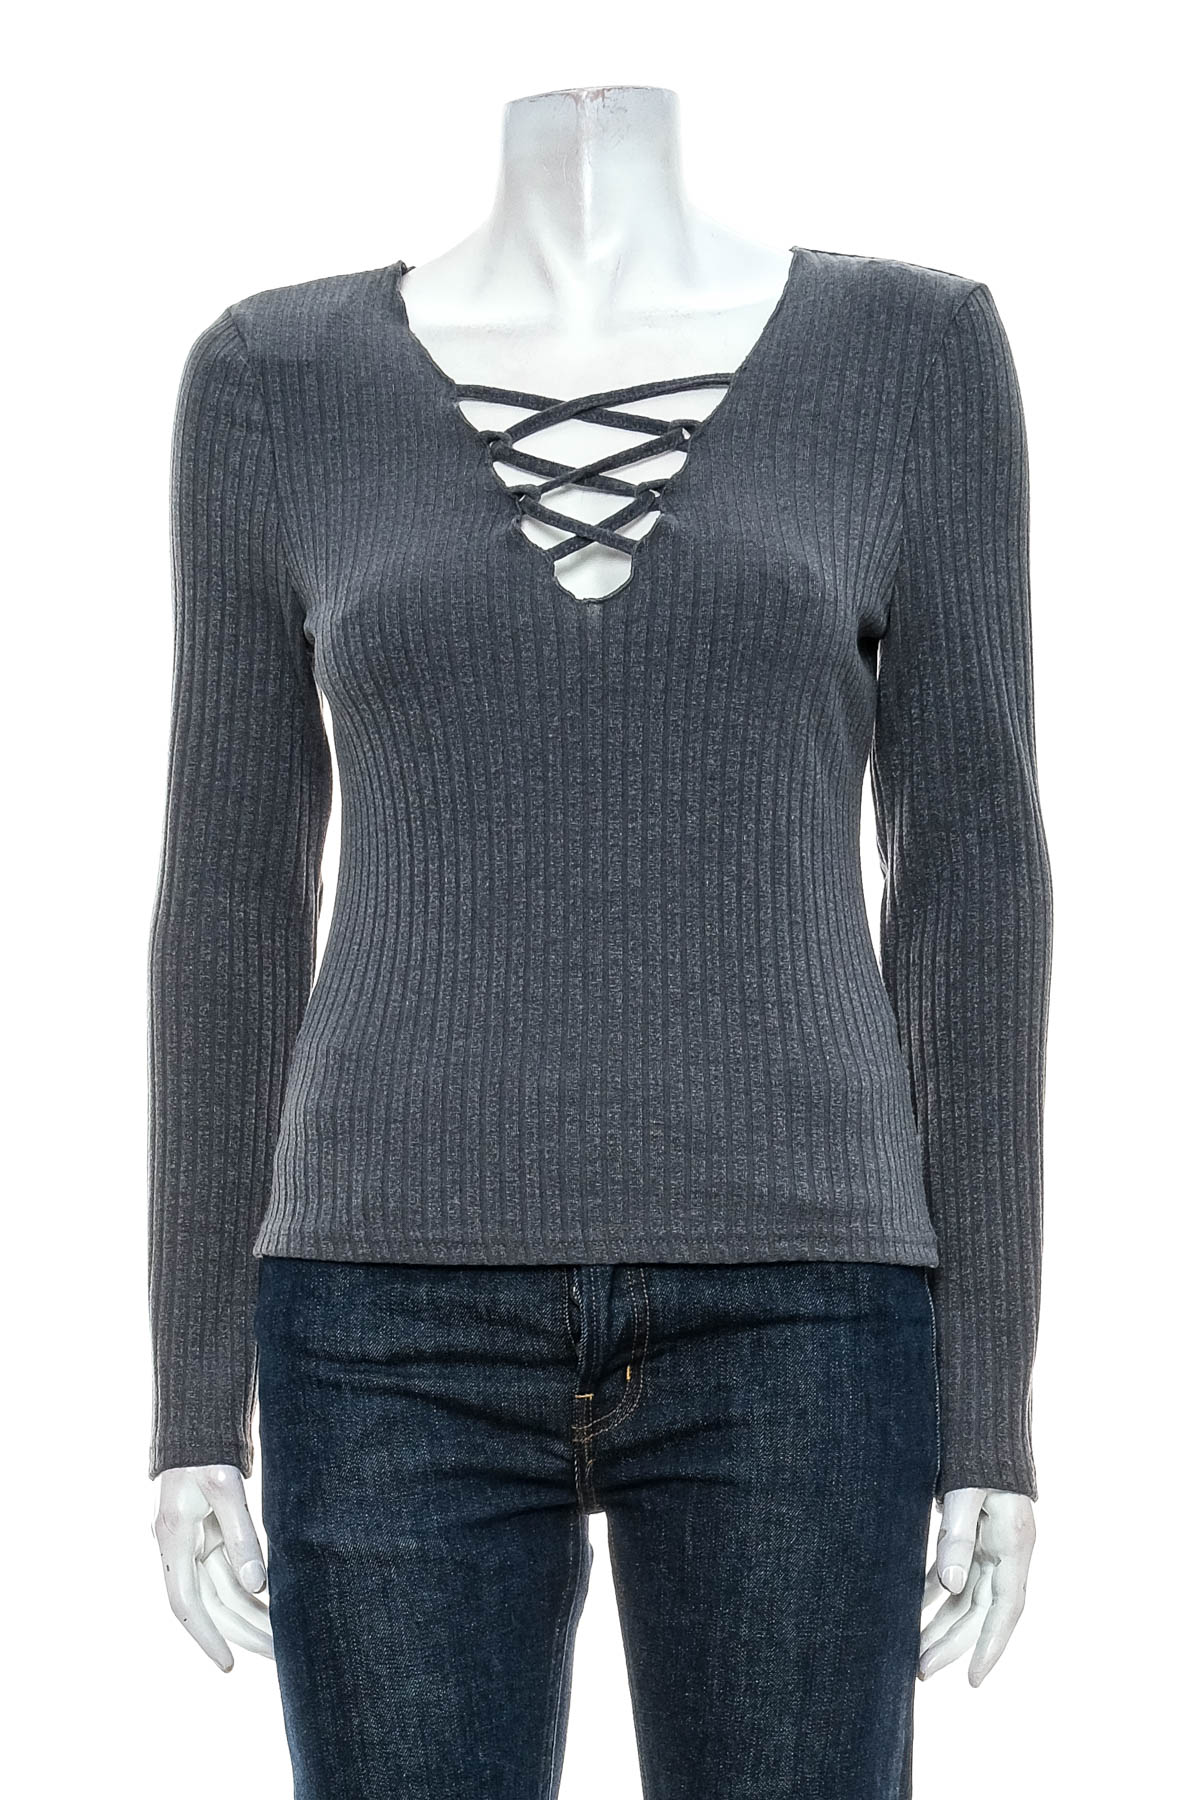 Women's sweater - SHEIN - 0